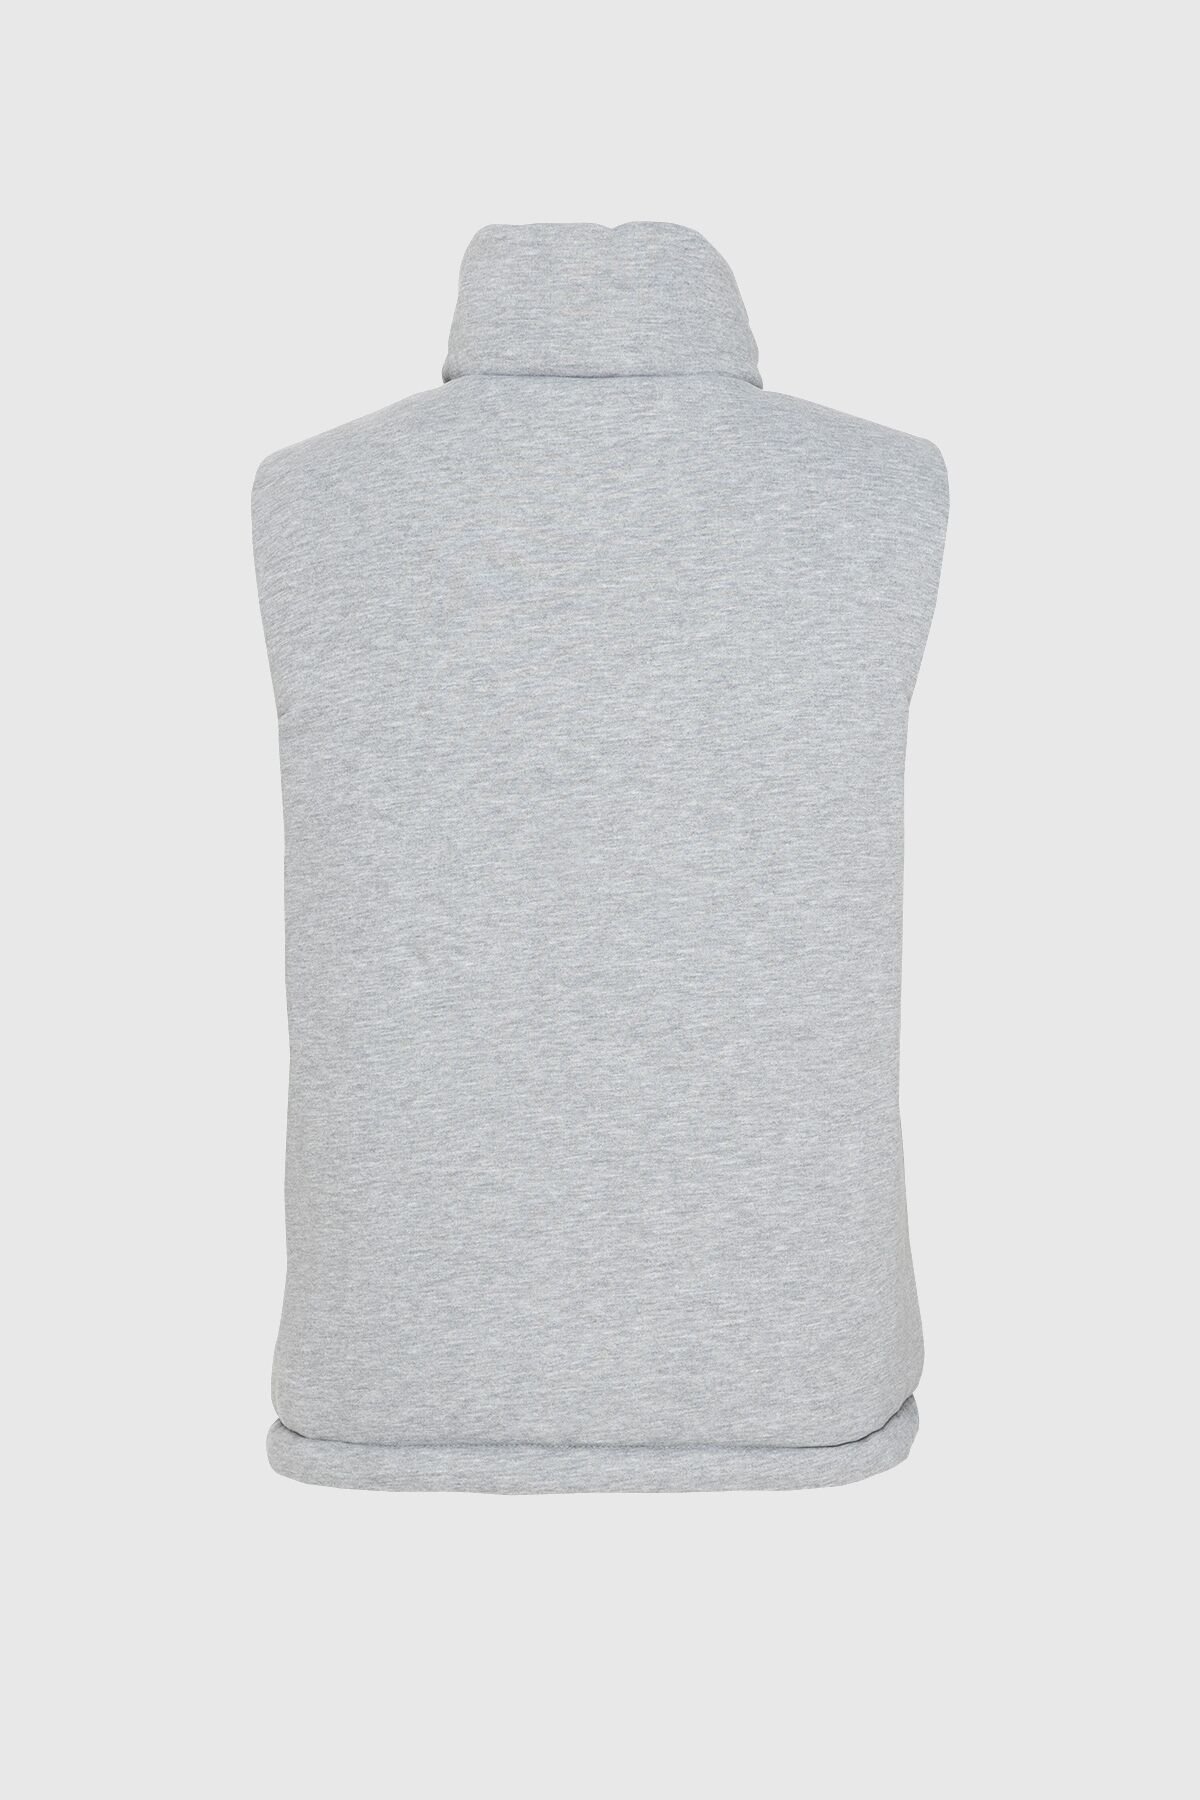 Ecru - Gray Double Sided Vest